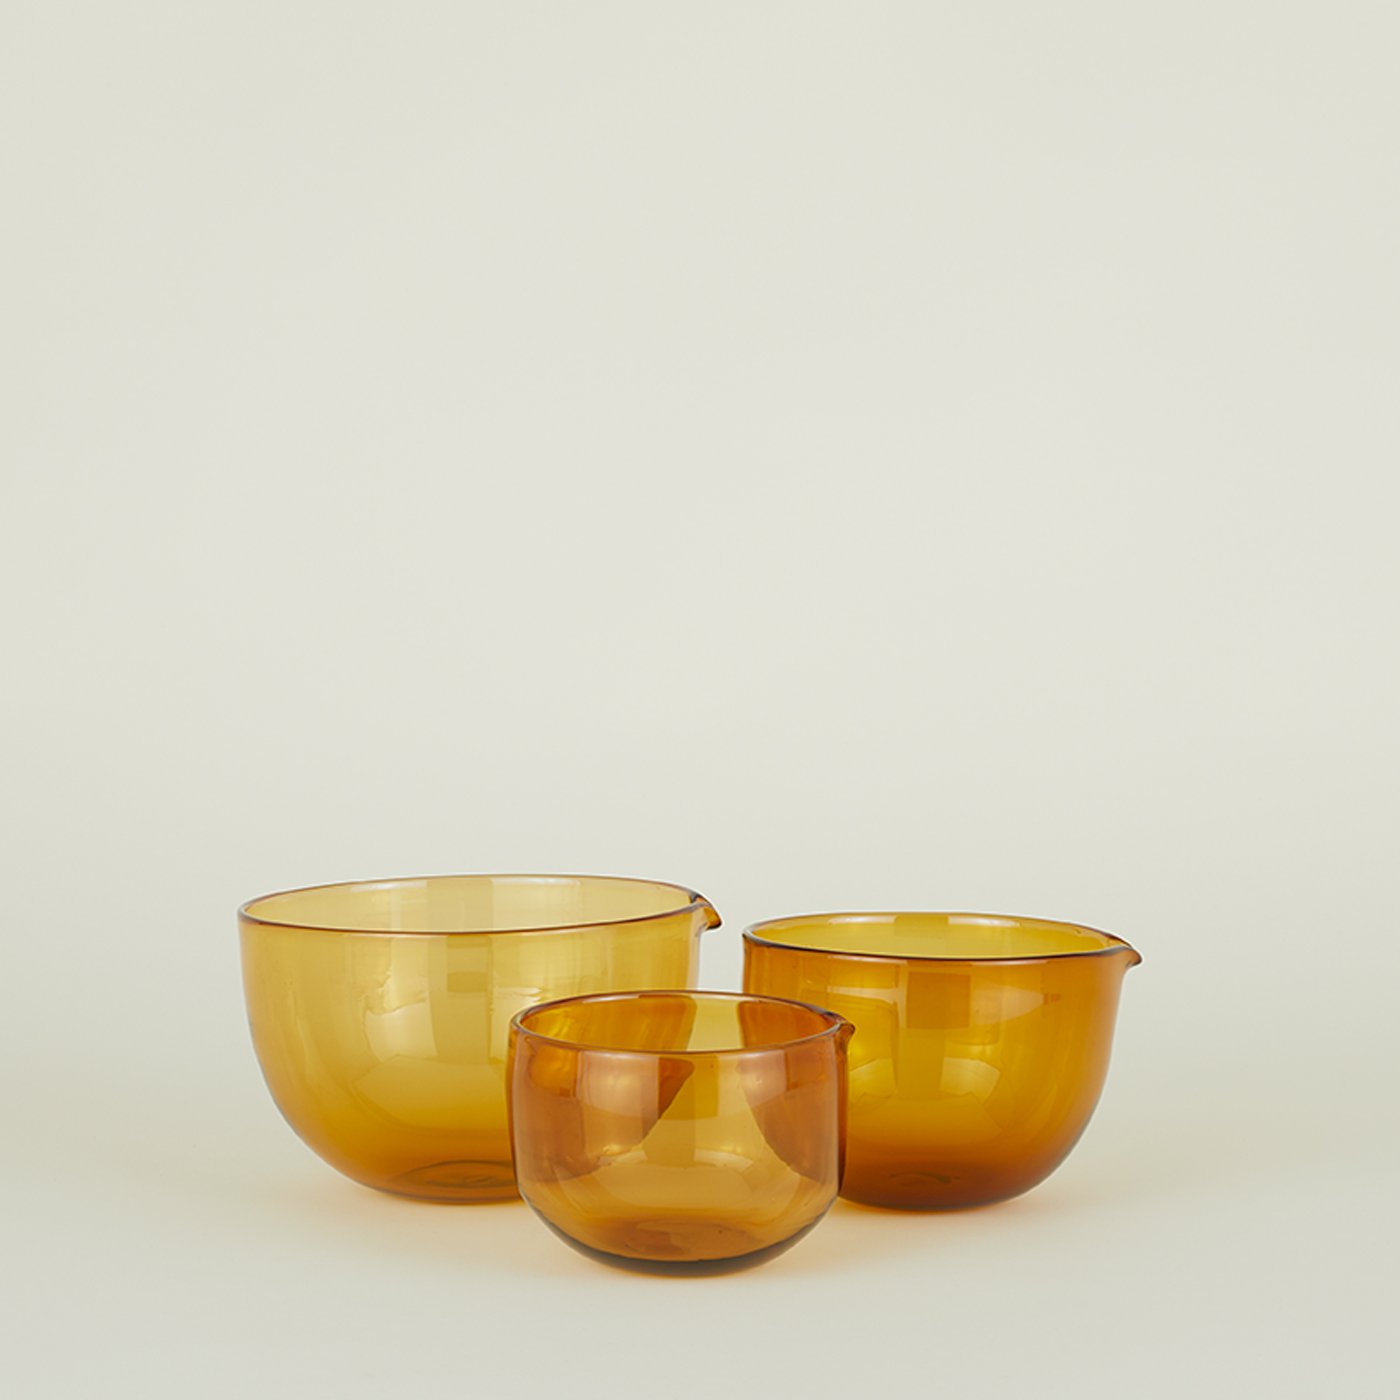 Orange Carnival Glass Nesting Bowls, Mixing Bowls, Batter Bowls